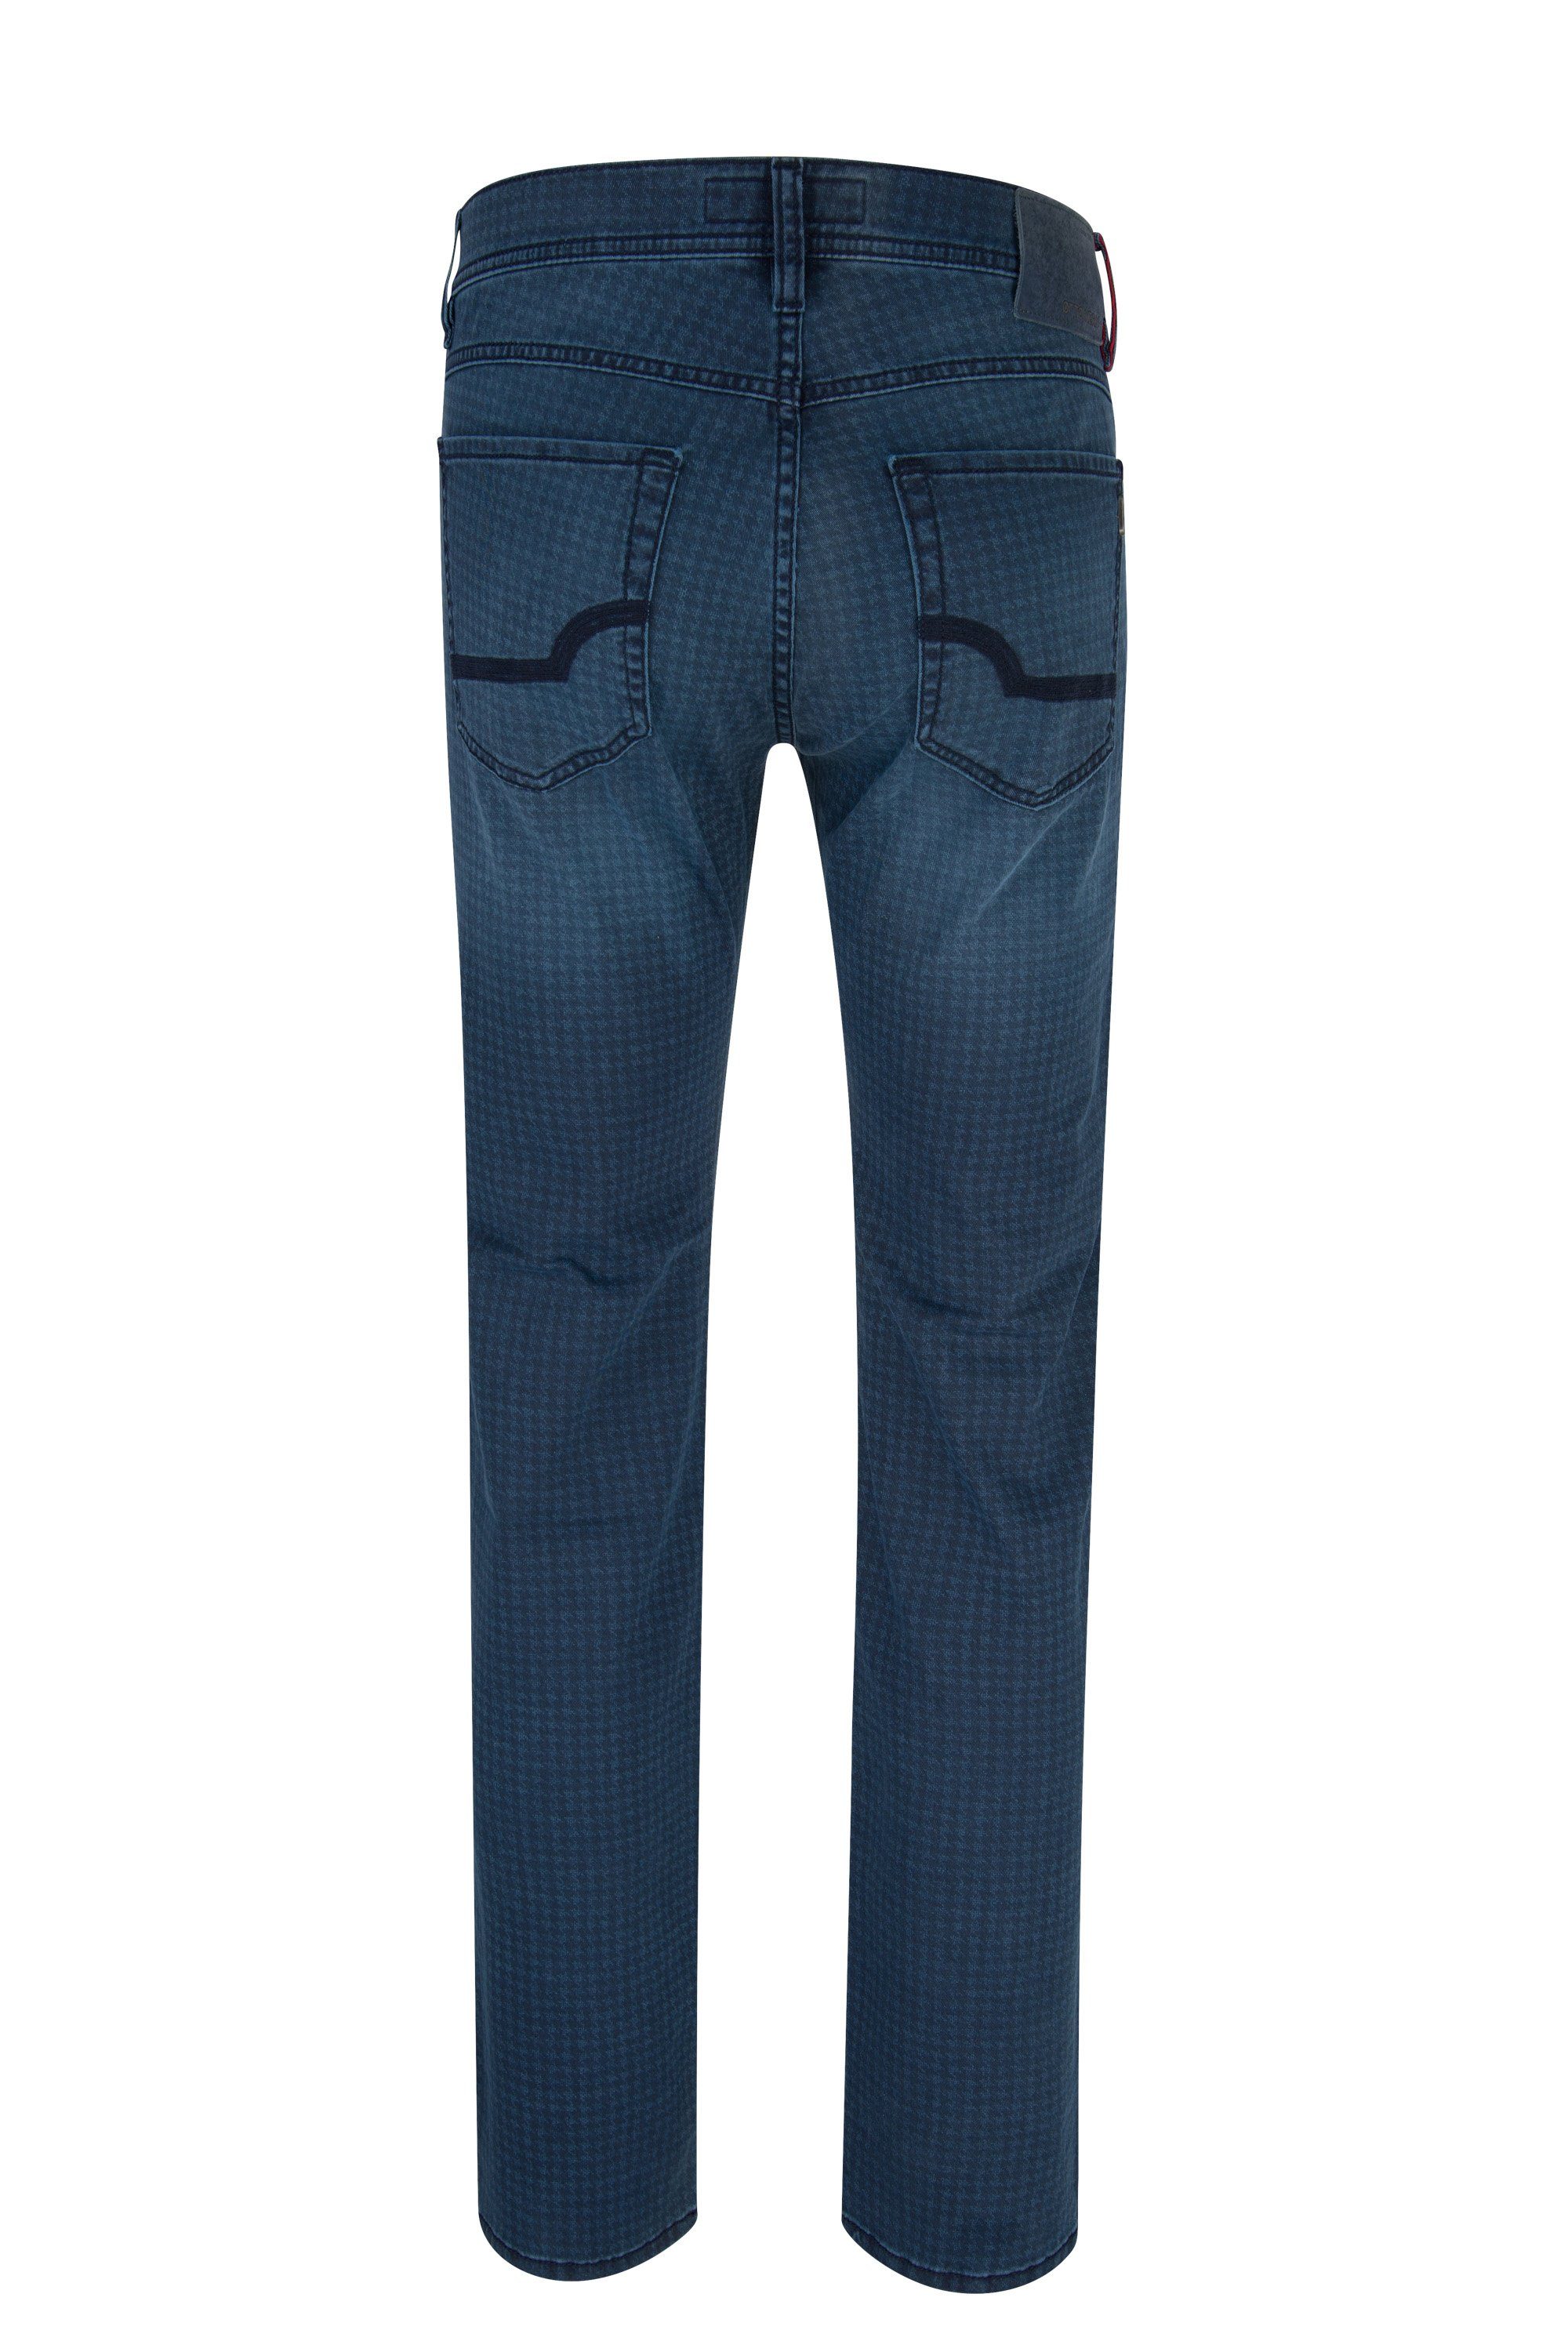 Kern 5-Pocket-Jeans blue 6700.6822 67042 KERN OTTO JOHN patterned used